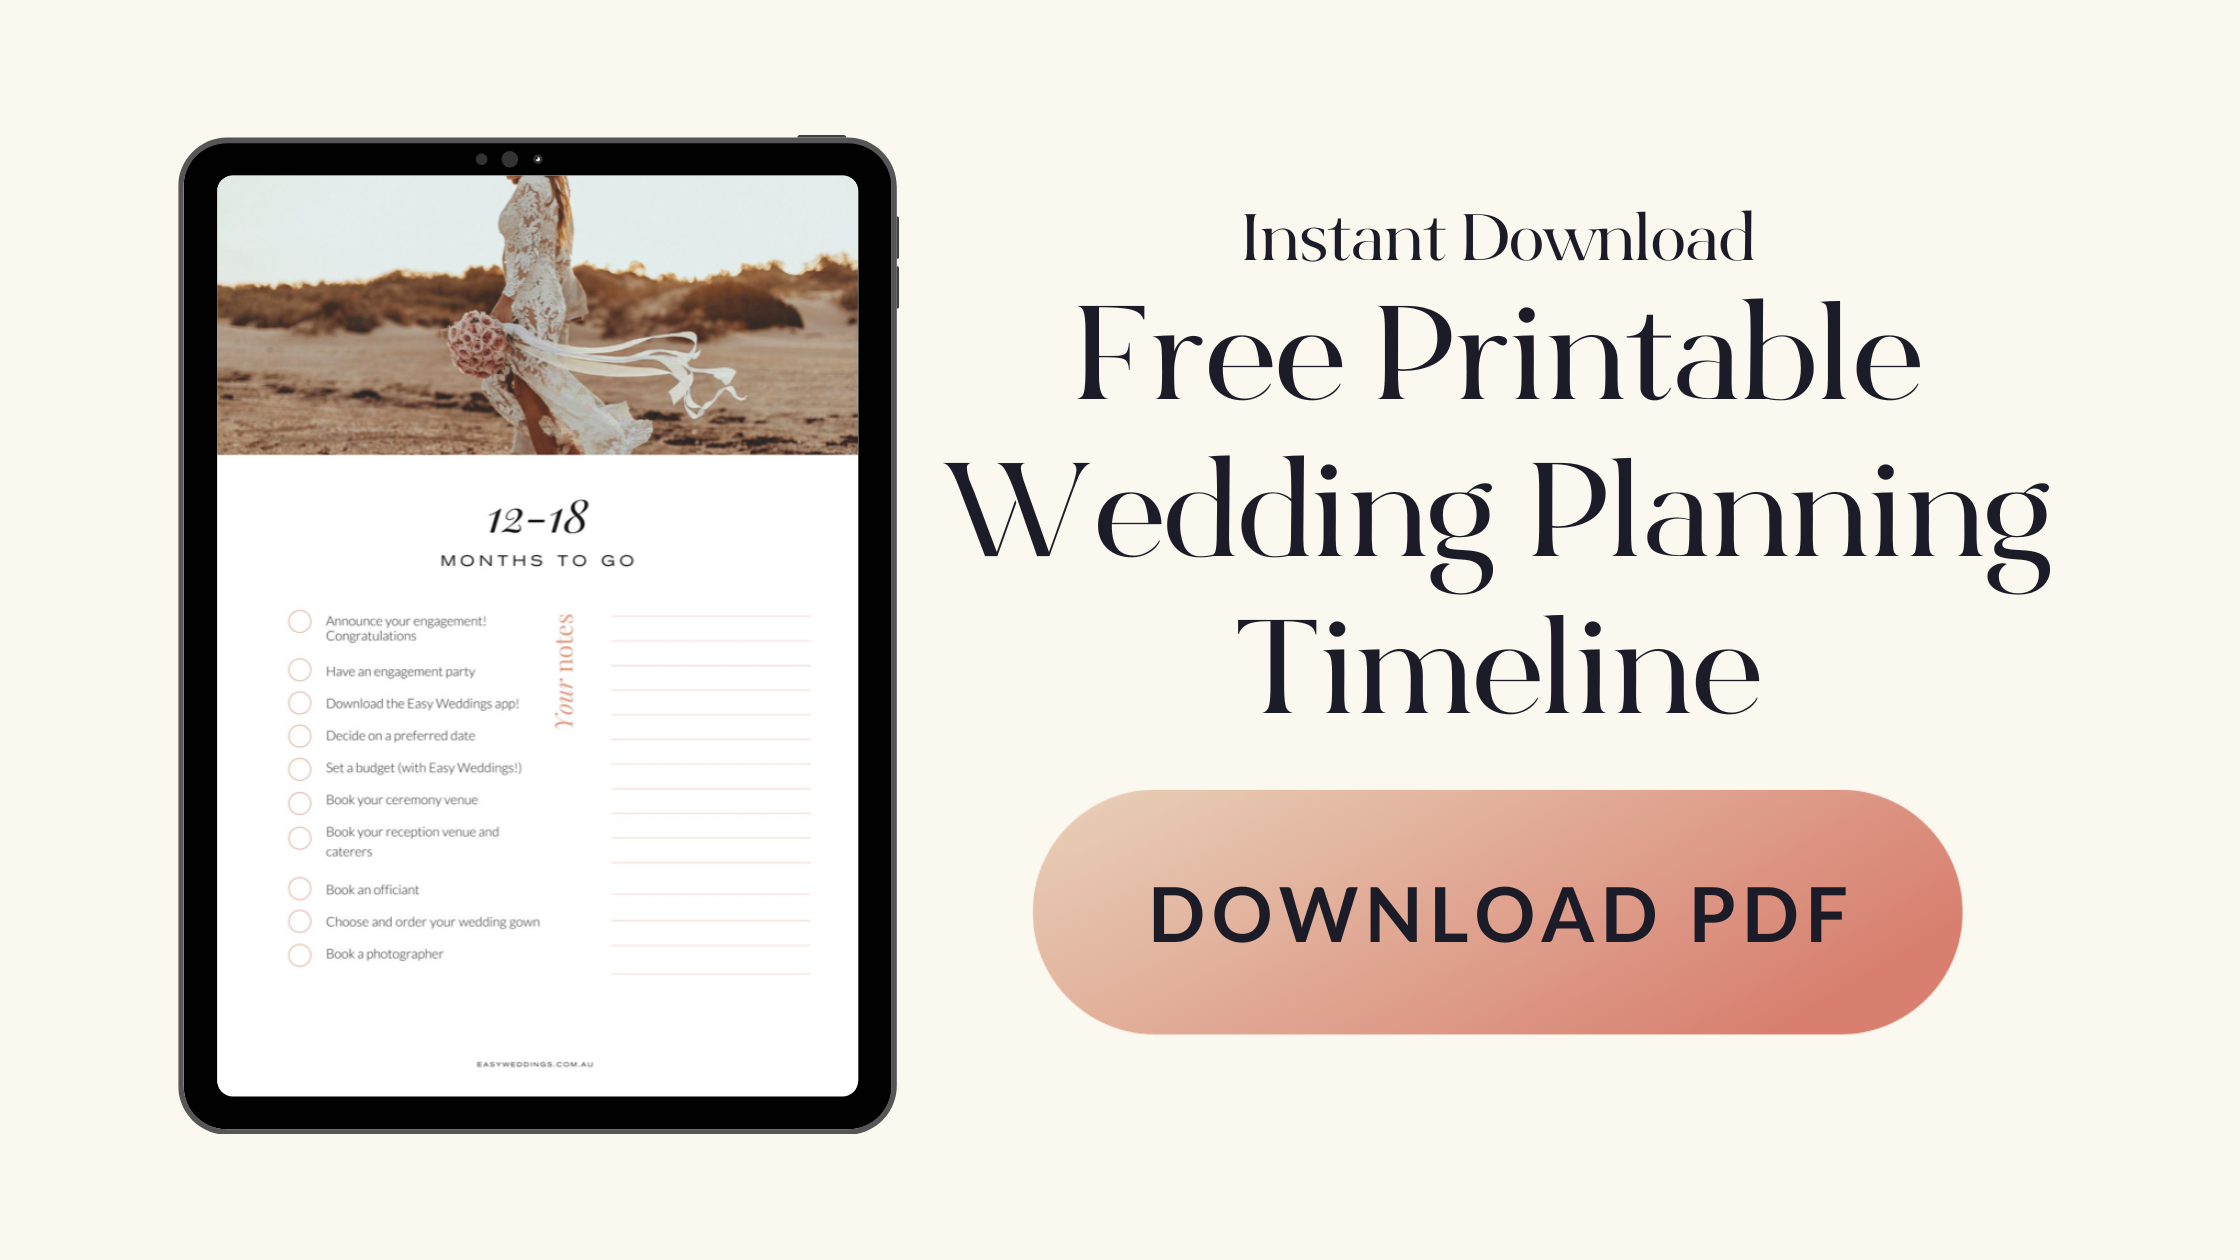 Get a free printable wedding planning checklist here